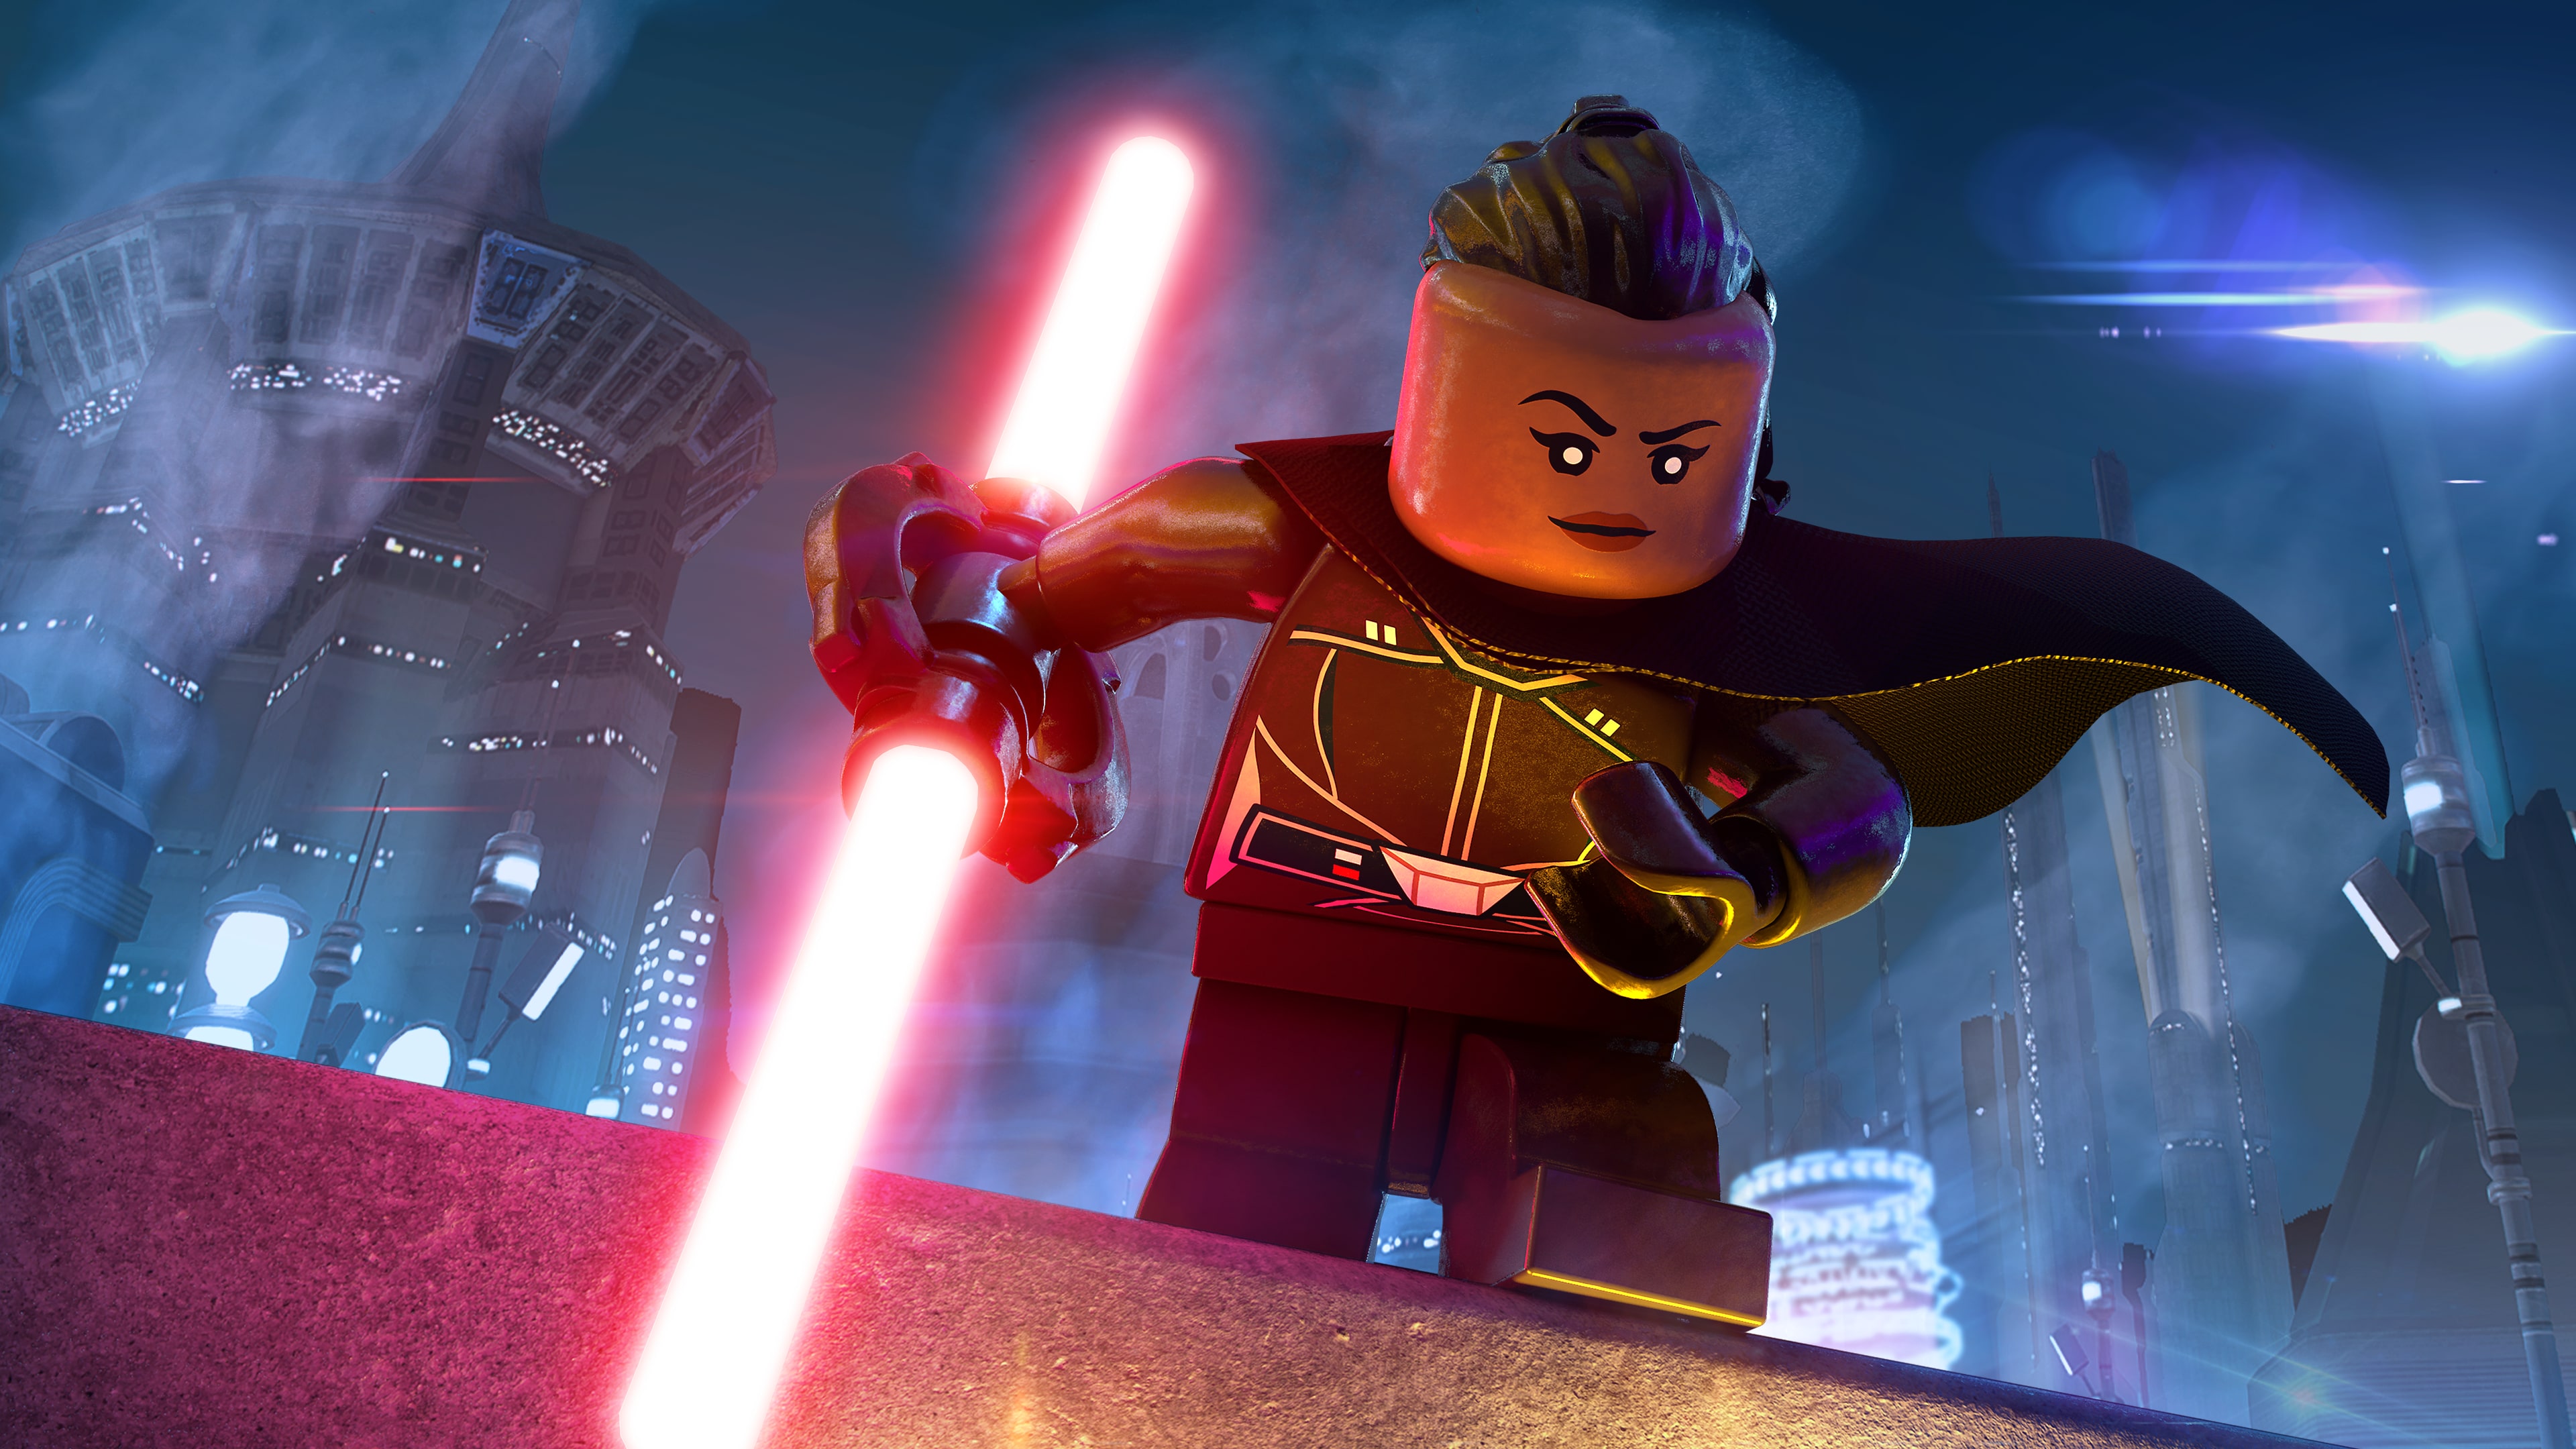 Pacote Obi-Wan Kenobi de LEGO® Star Wars™: A Saga Skywalker